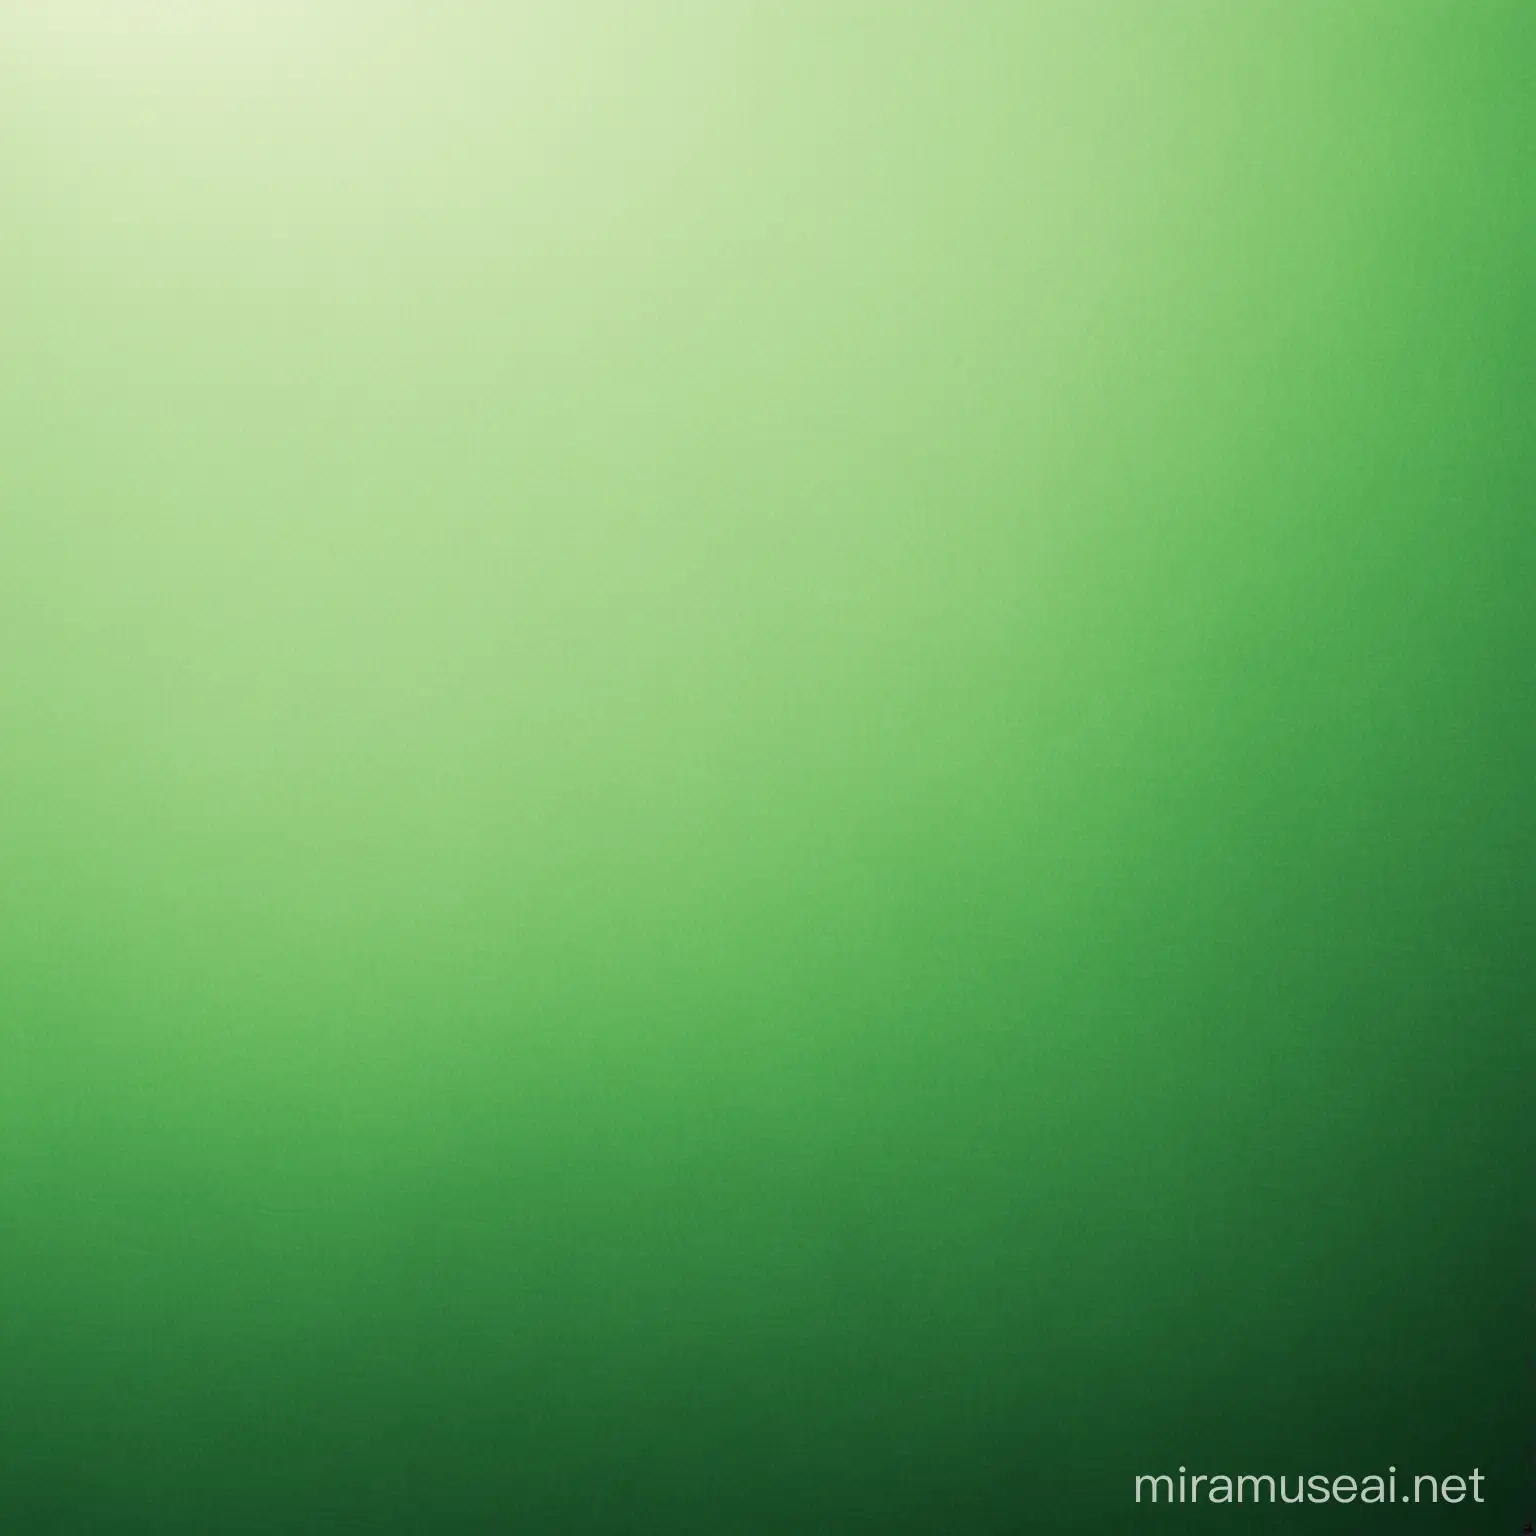 Green shades background